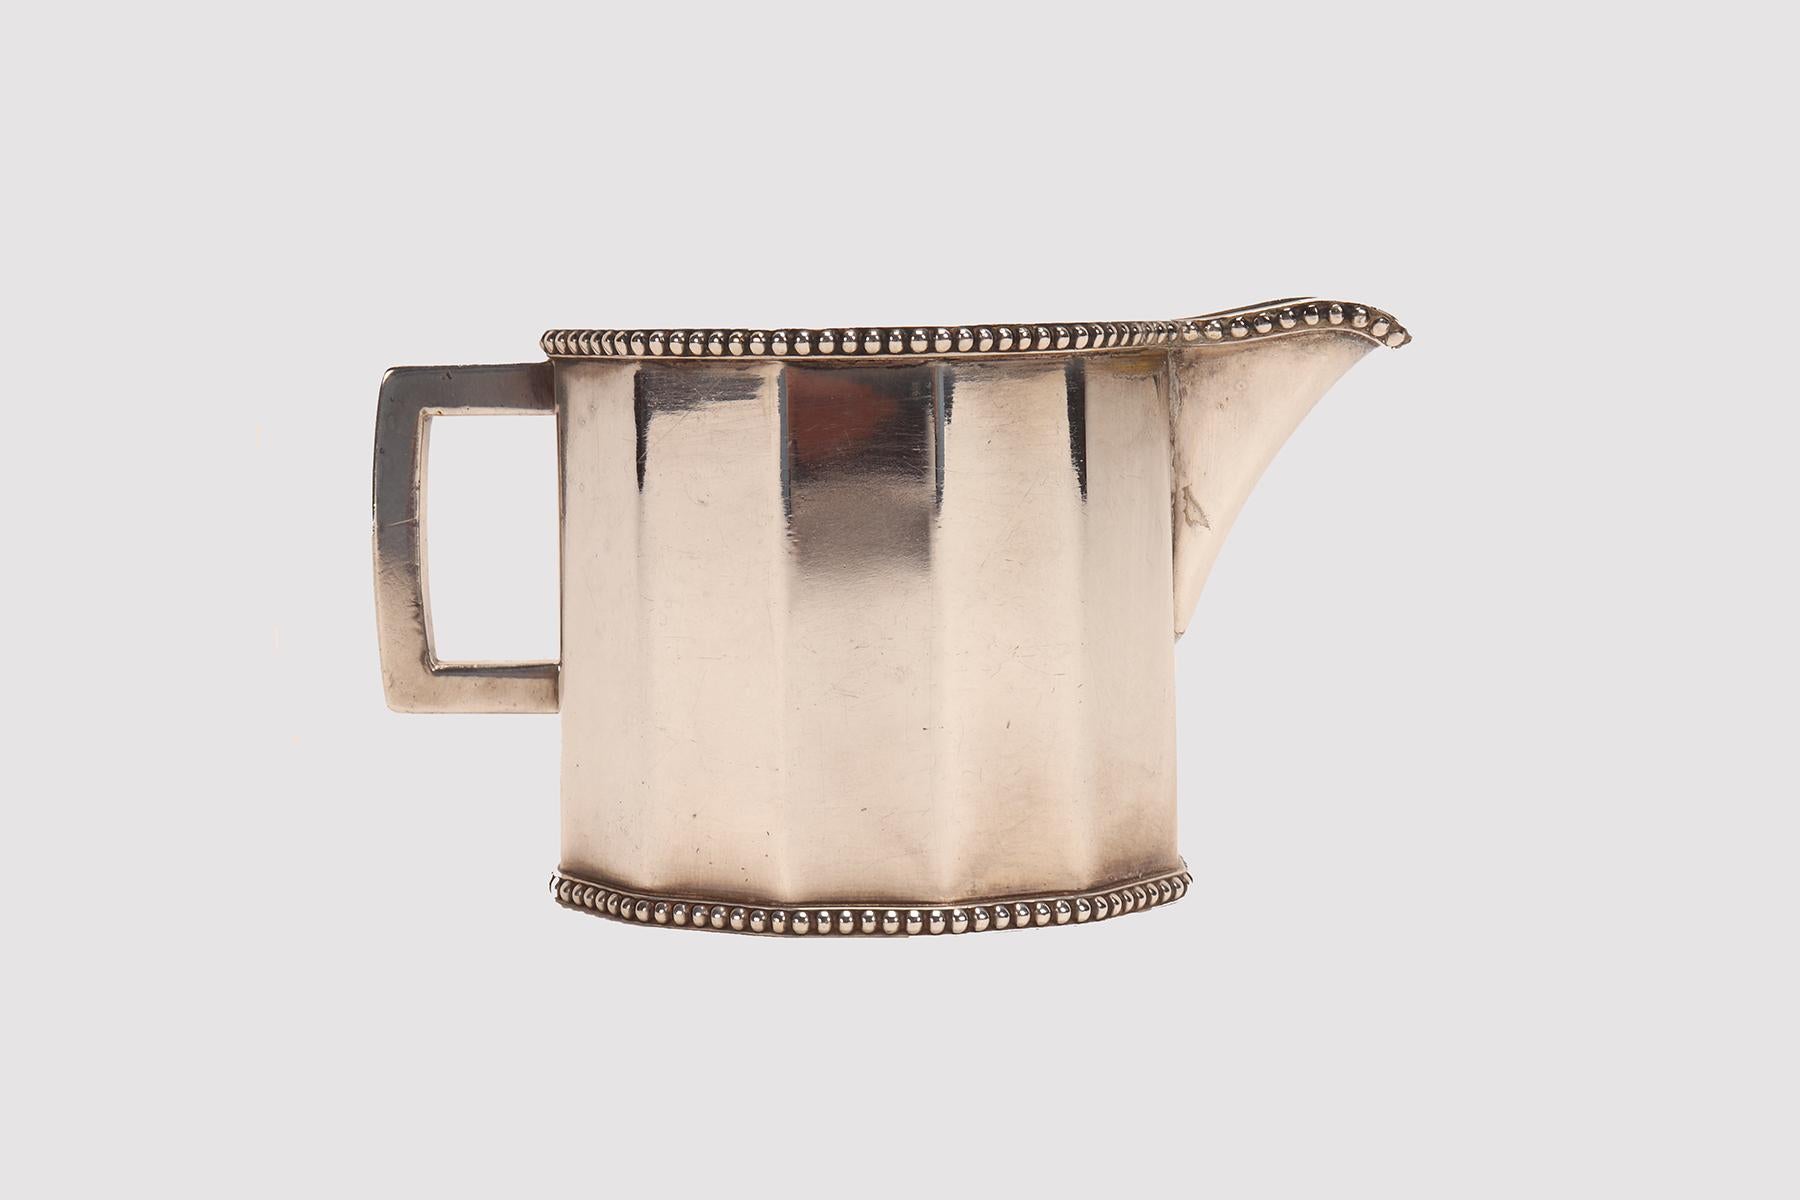 Milk jug with handle, made of dodecagon-shaped smooth silver-plated brass,
Wiener Werkstätte, Vienna, Austria circa 1920.
 